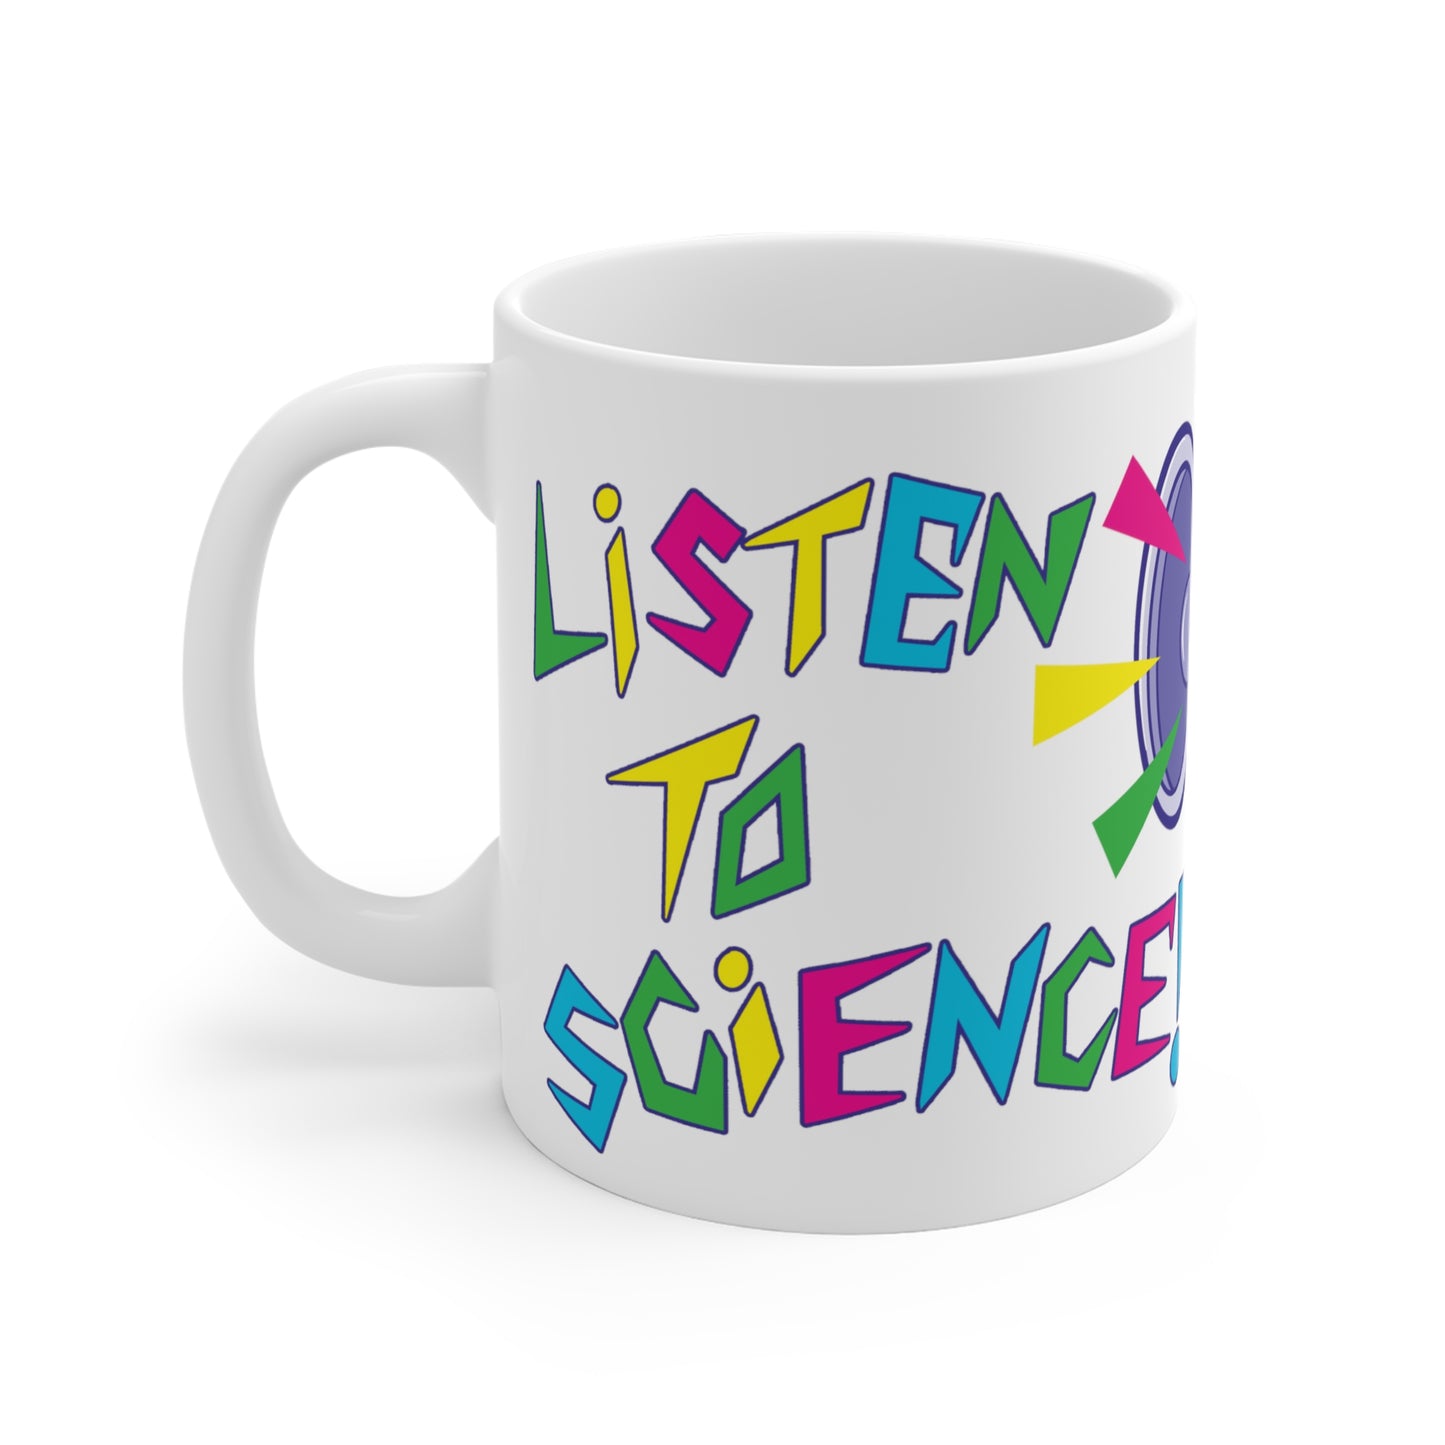 "Listen to Science!" - Ceramic Mugs (11oz/15oz/20oz)